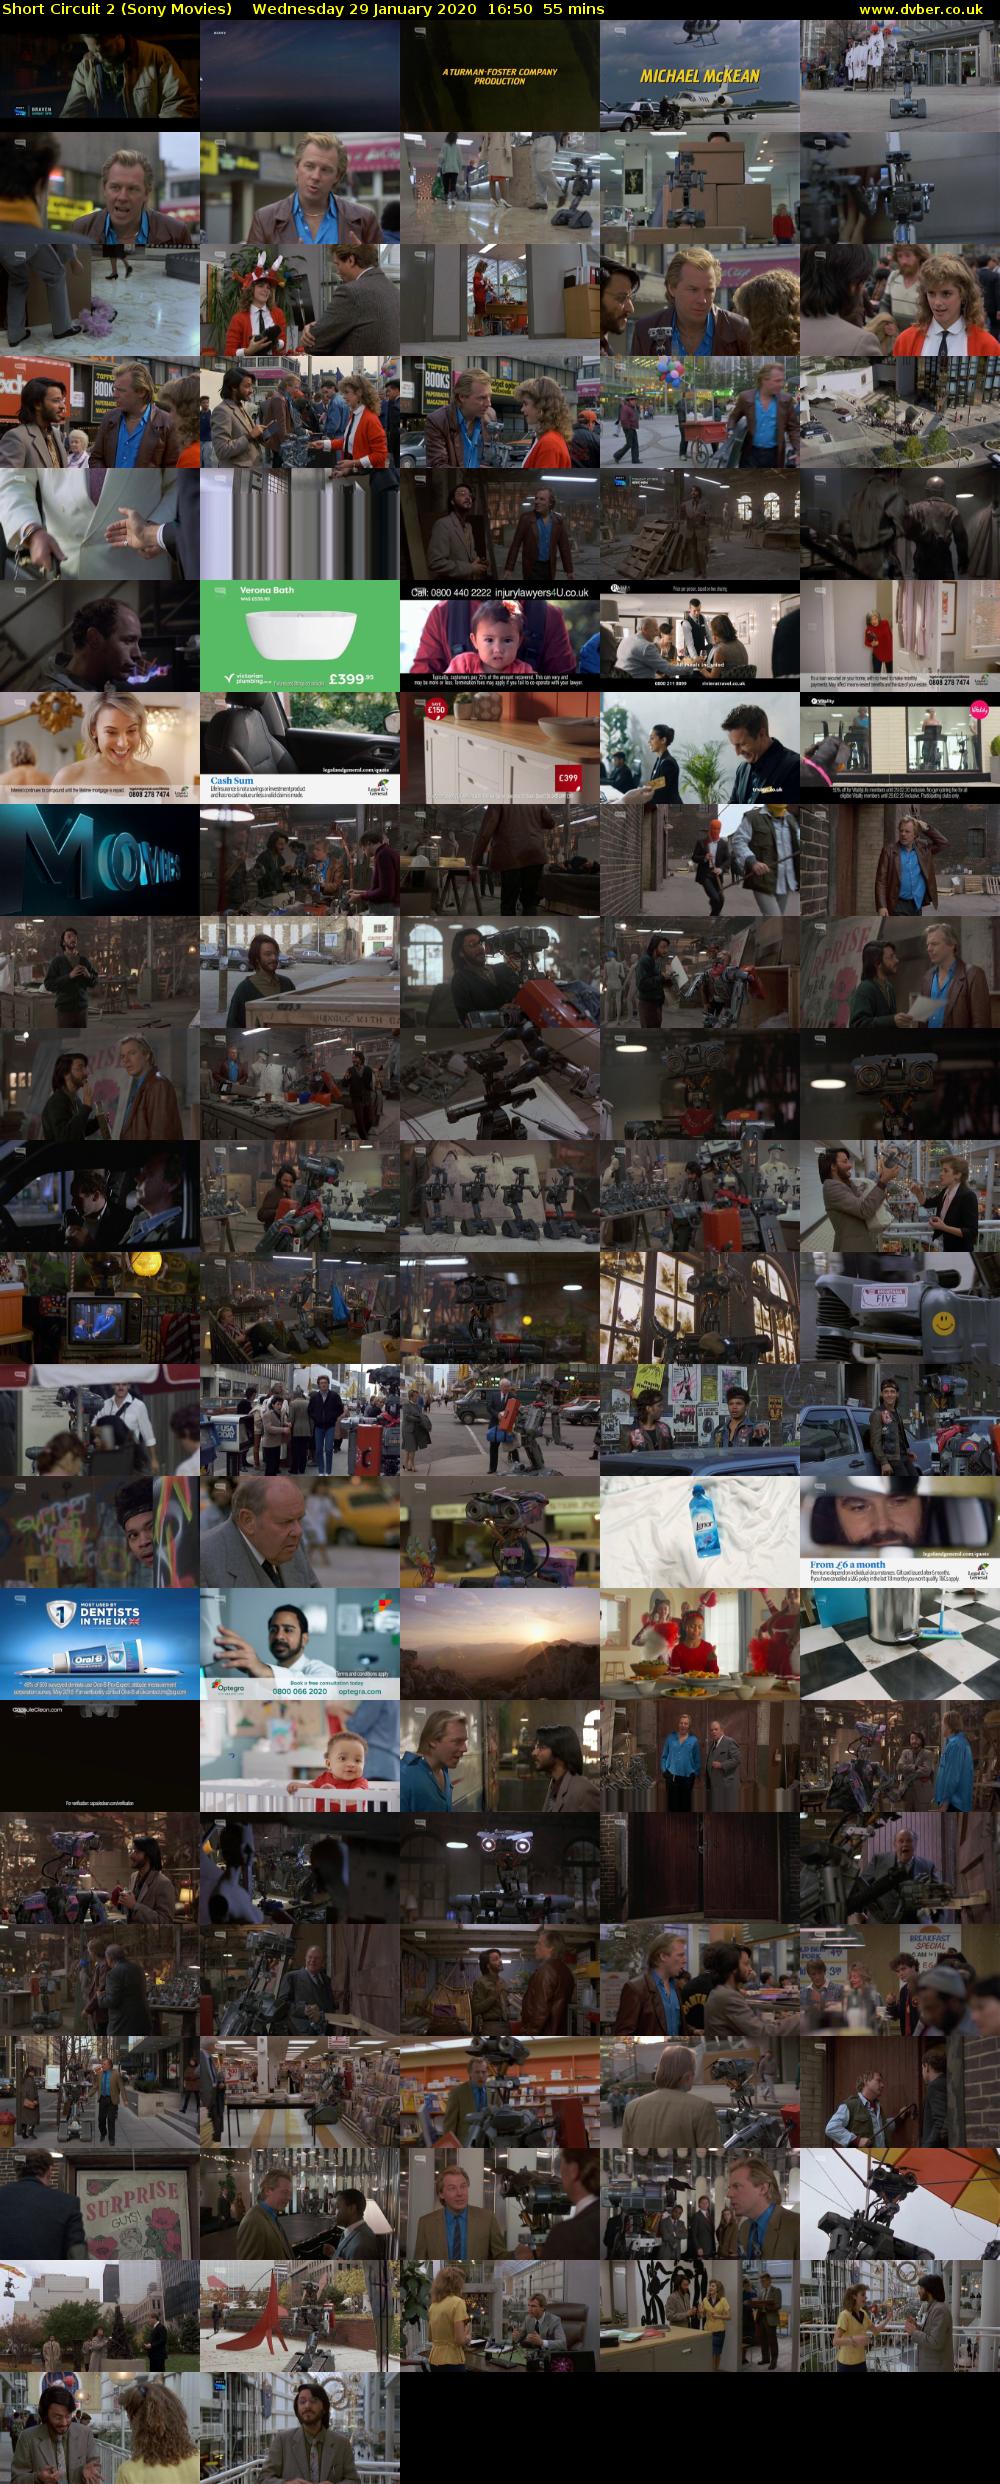 Short Circuit 2 (Sony Movies) Wednesday 29 January 2020 16:50 - 17:45